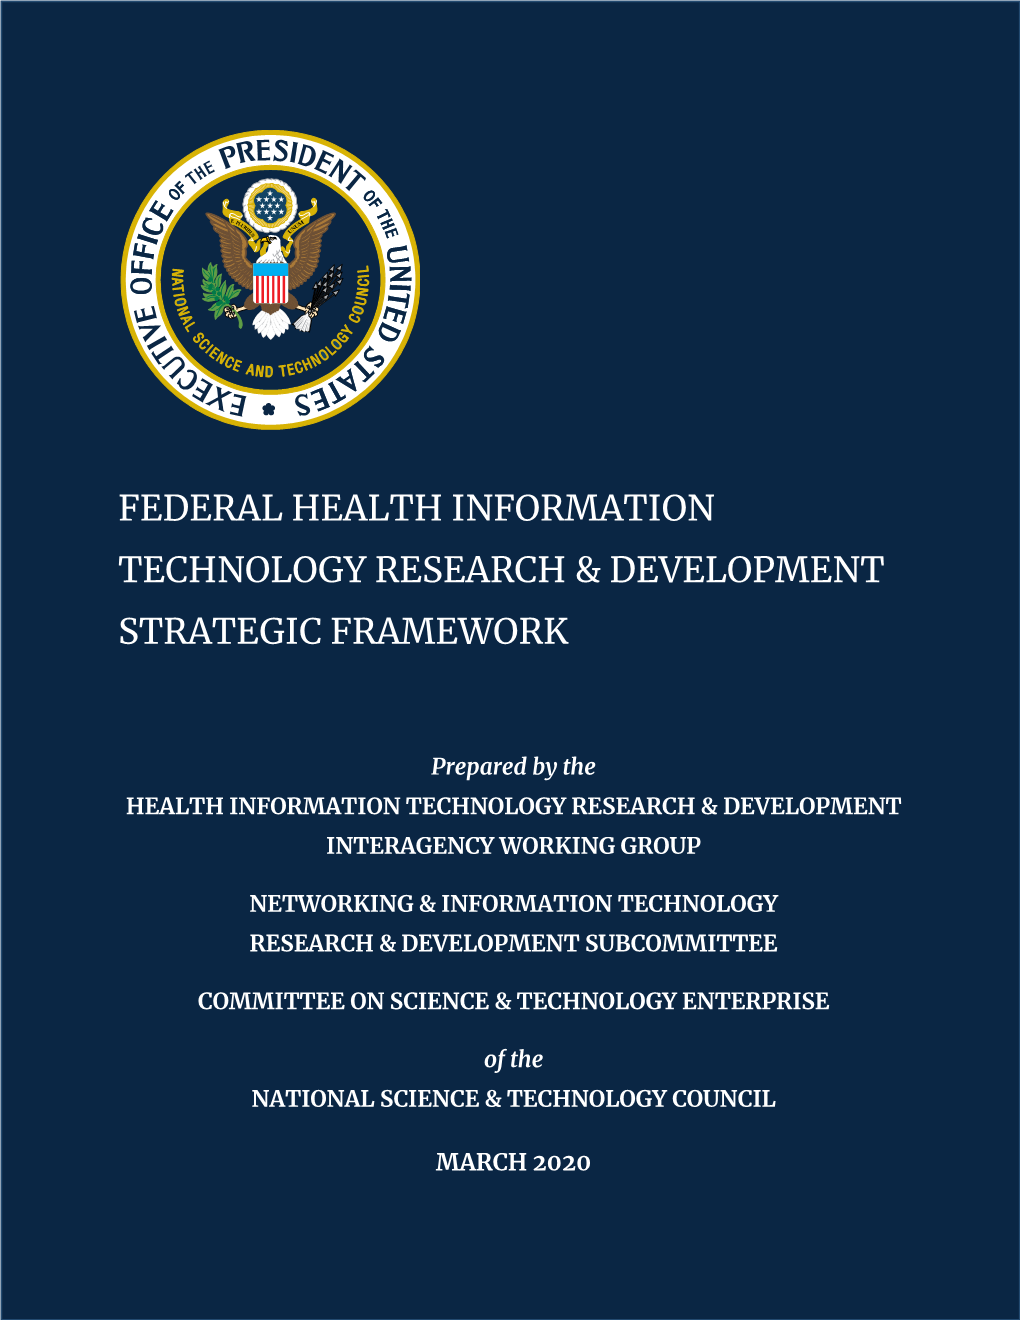 Strategic Framework for Federal Health Information Technology Research